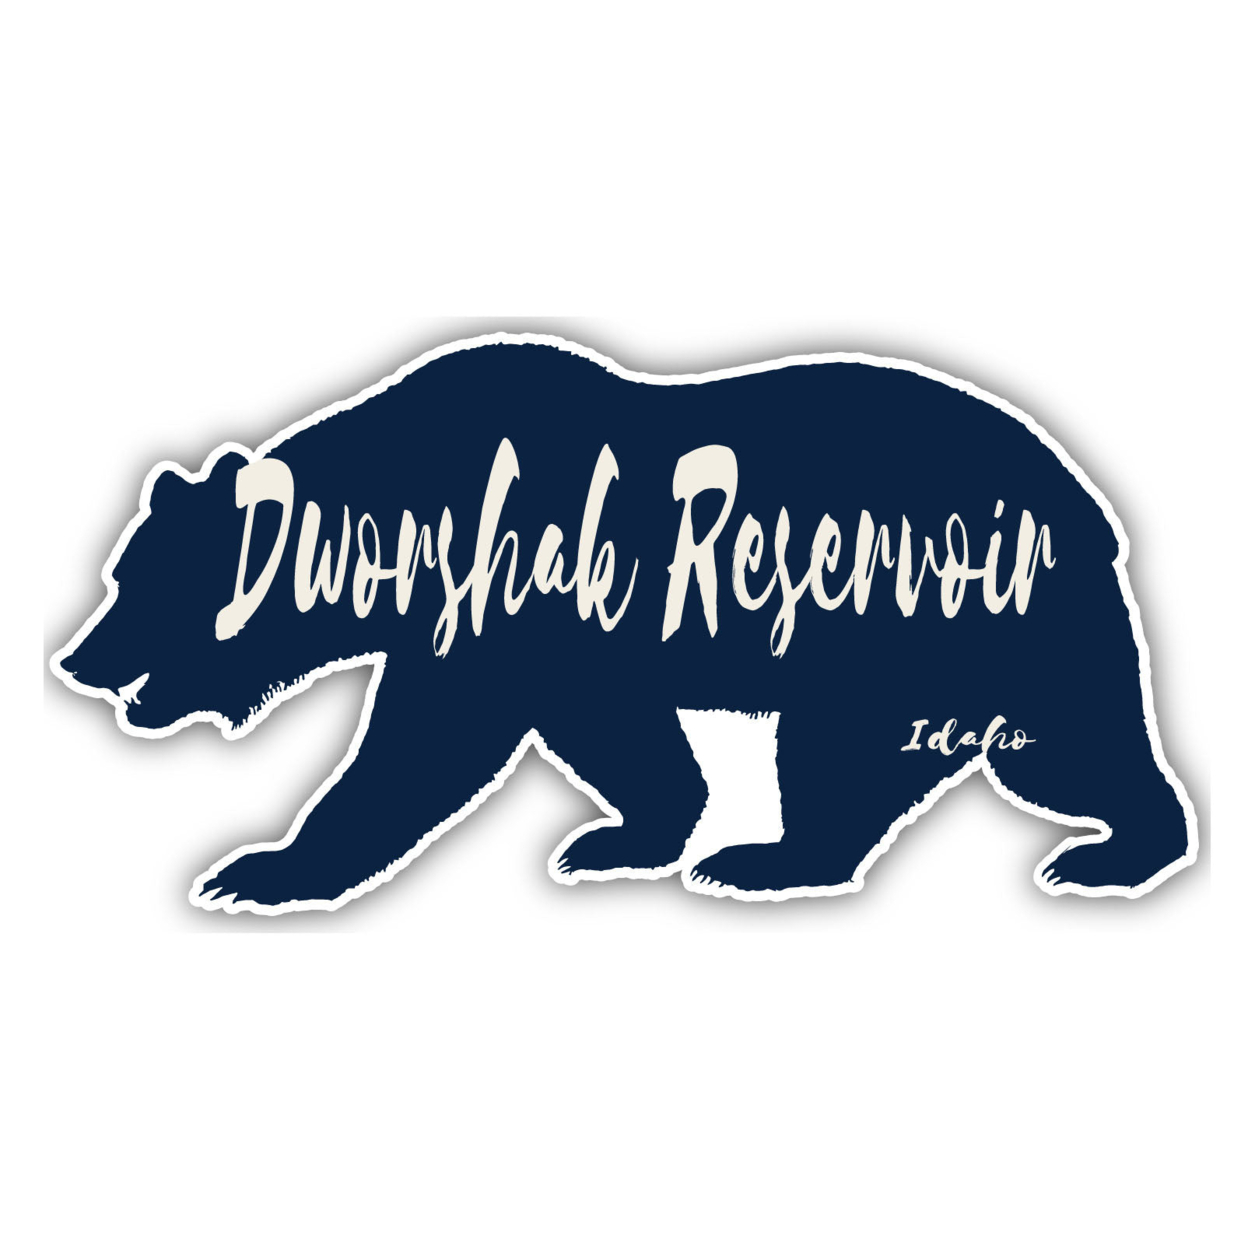 Dworshak Reservoir Idaho Souvenir Decorative Stickers (Choose Theme And Size) - Single Unit, 2-Inch, Camp Life